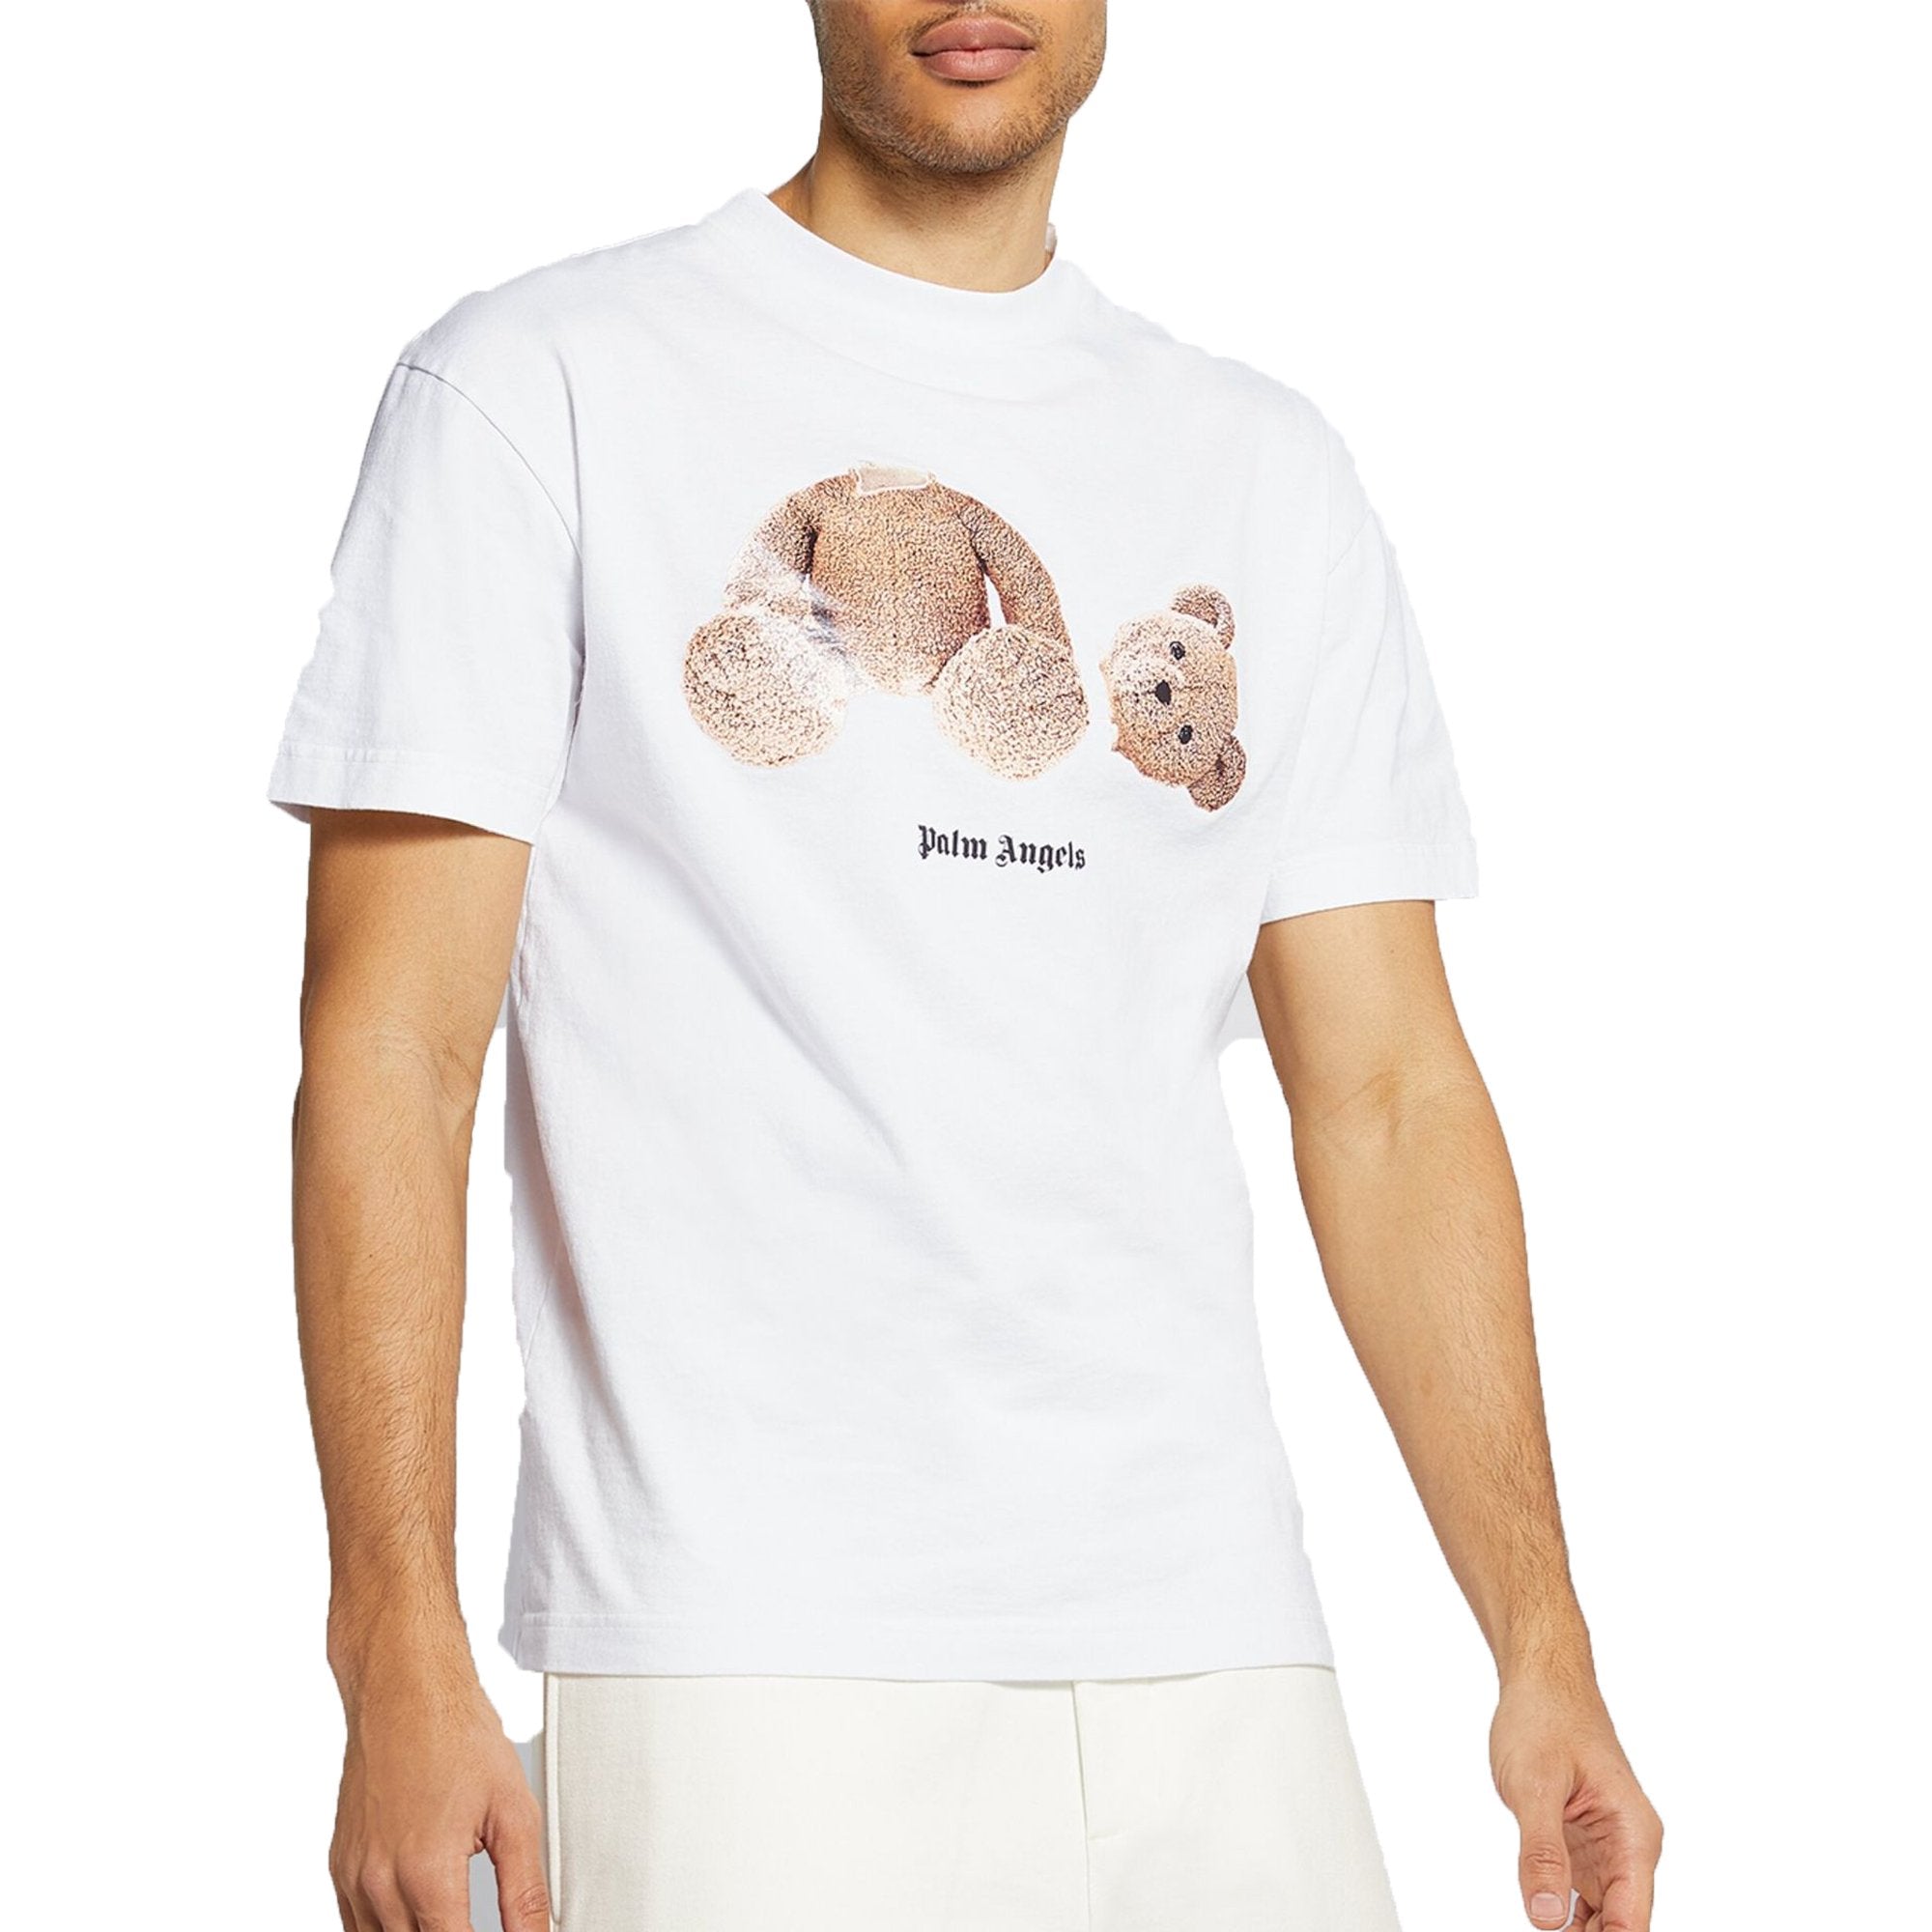 Palm Angels "Kill The Bear" T-shirt - White